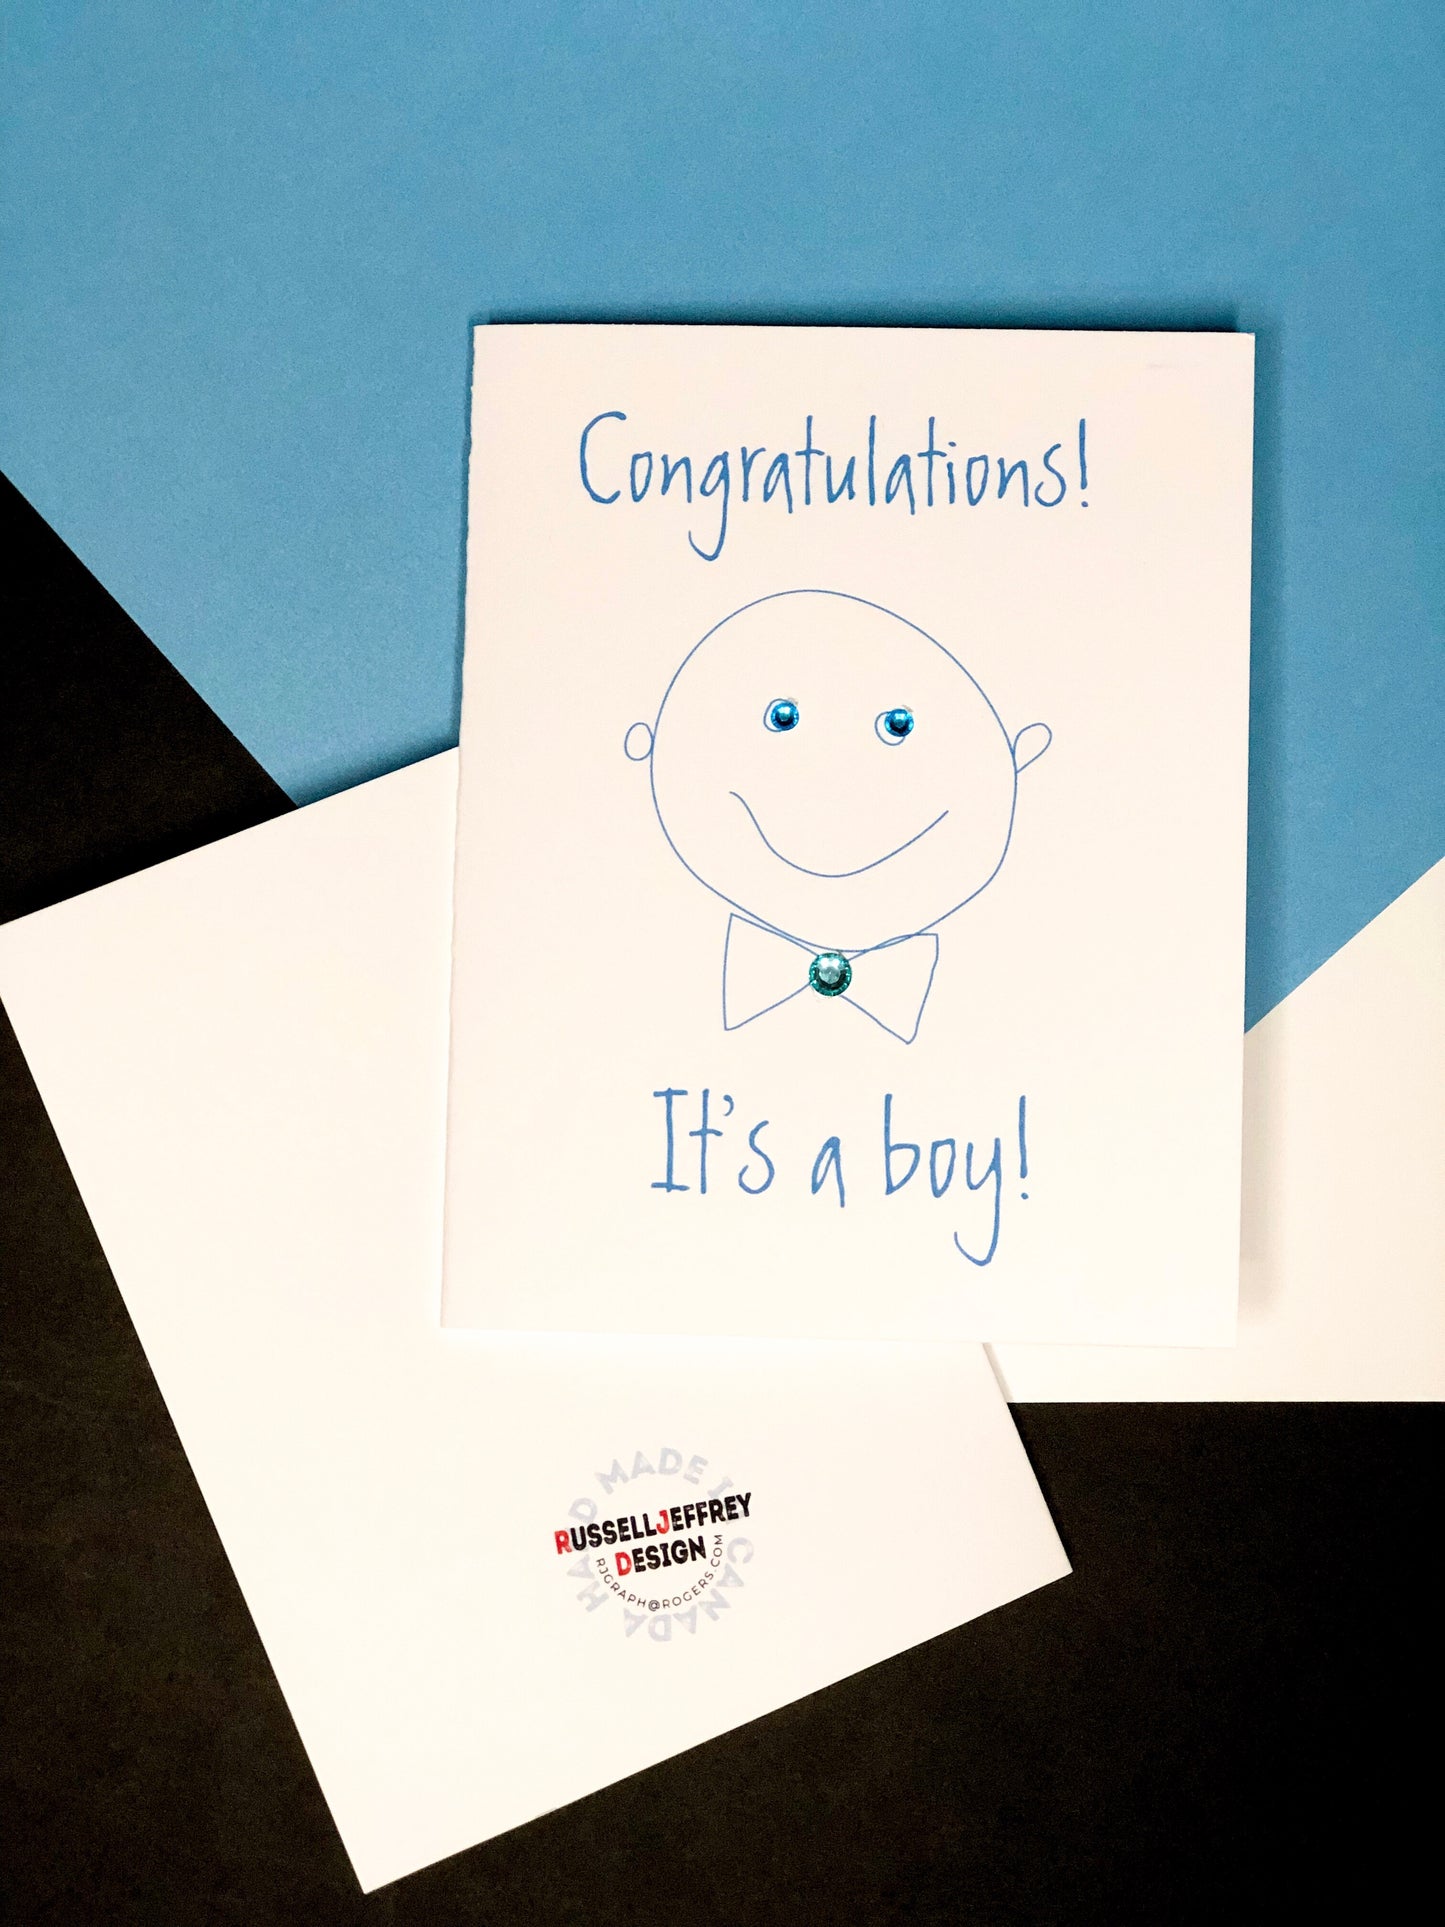 Congratulations! It's a Boy! Greeting Card